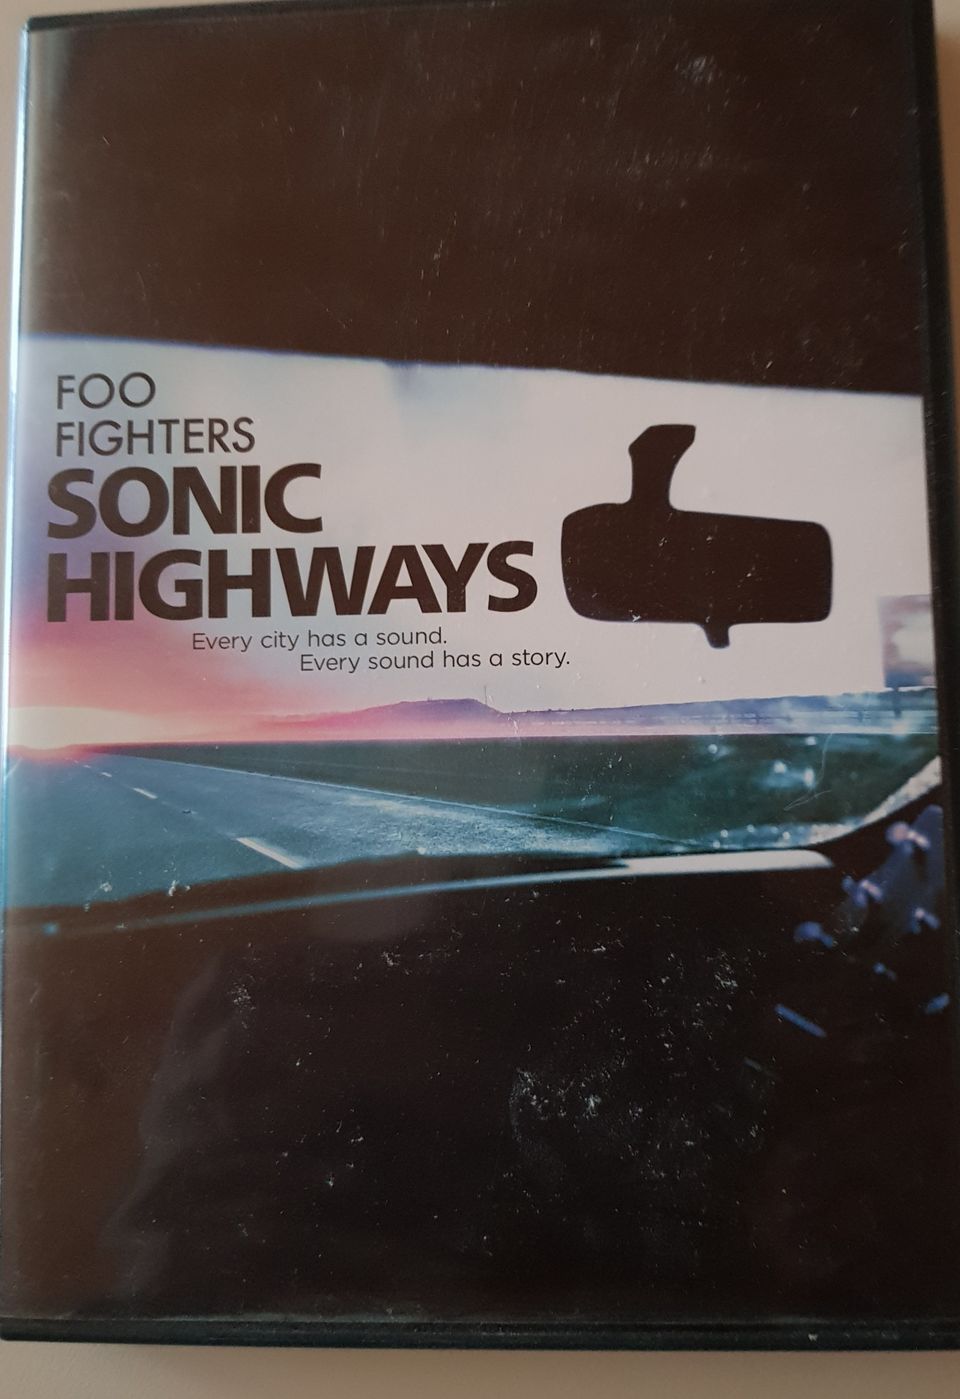 Foo Fighters / Sonic Highways